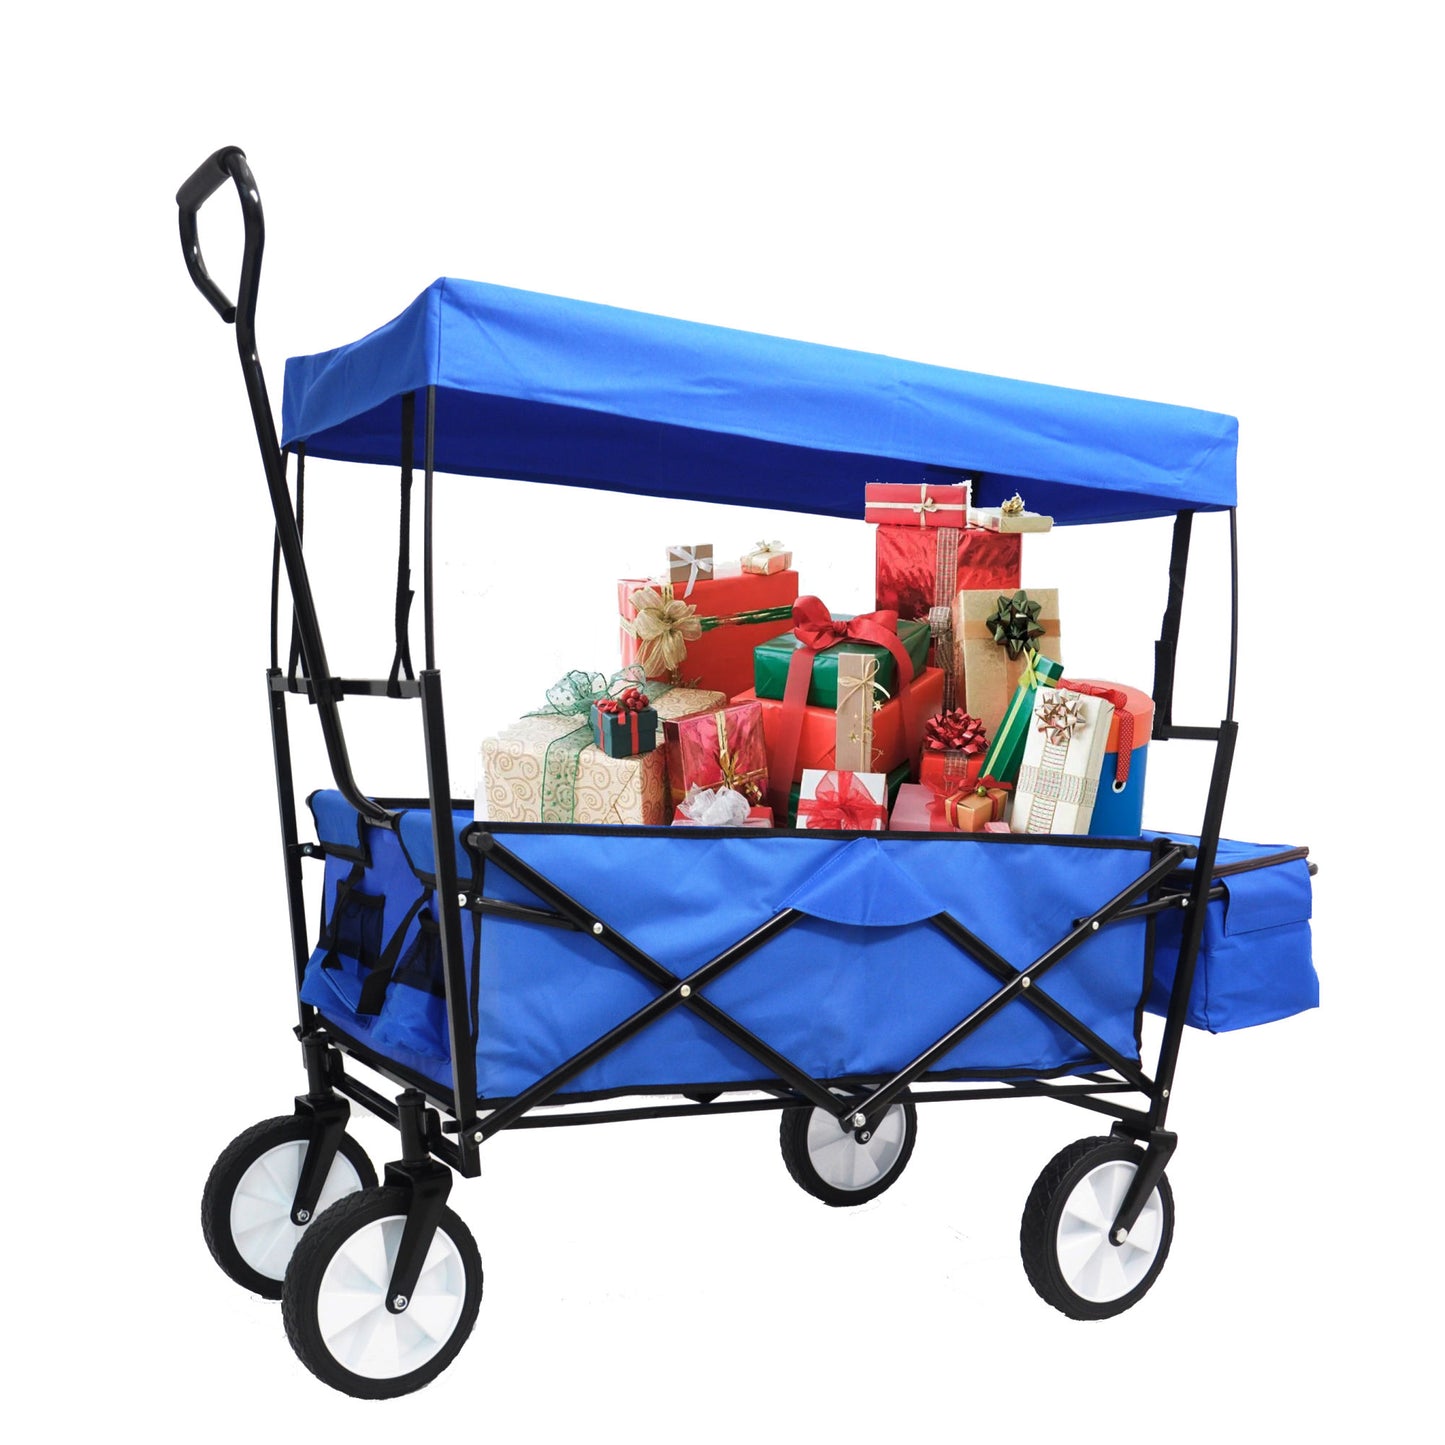 Garden Shopping Beach Cart folding wagon